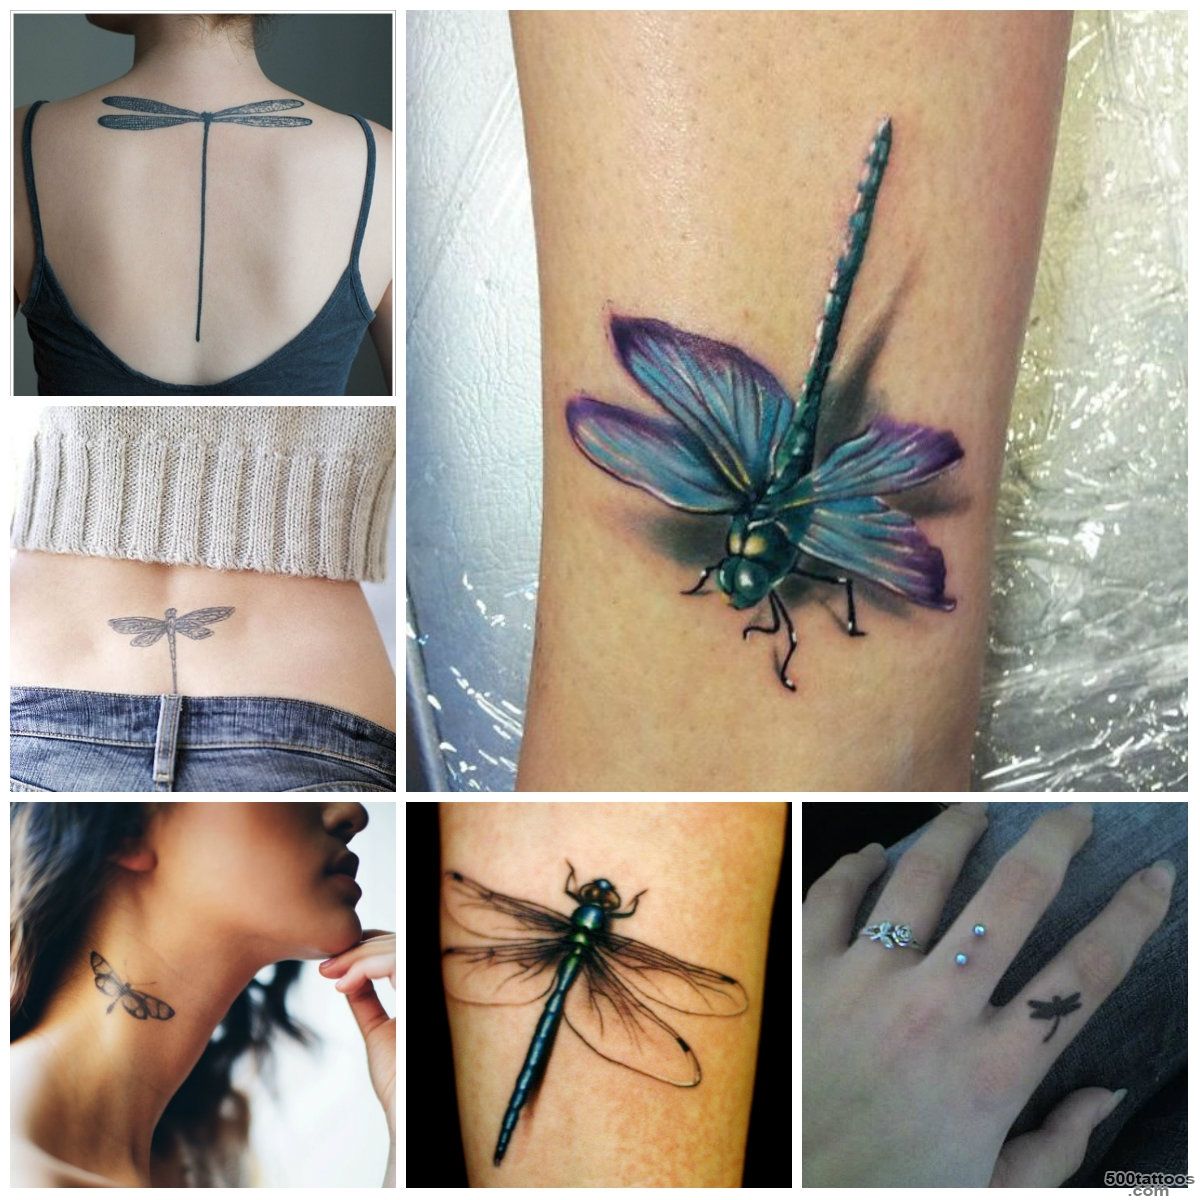 Stunning Dragonfly Tattoo Ideas  Tattoo Ideas Gallery amp Designs ..._43